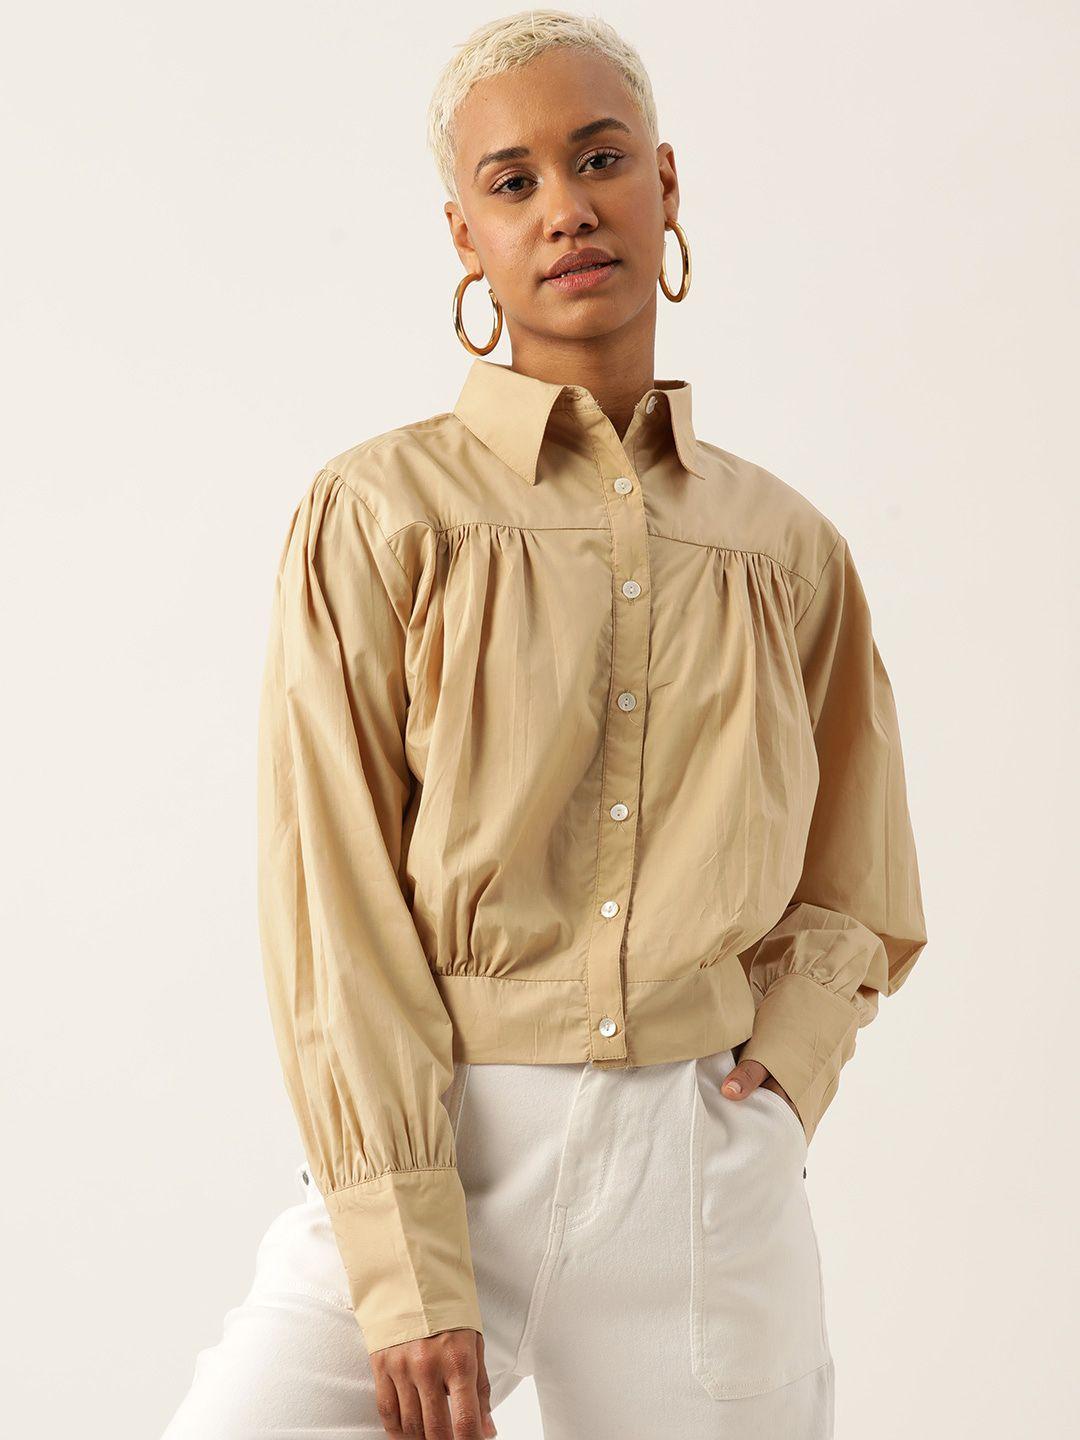 label regalia puff sleeves shirt style crop top